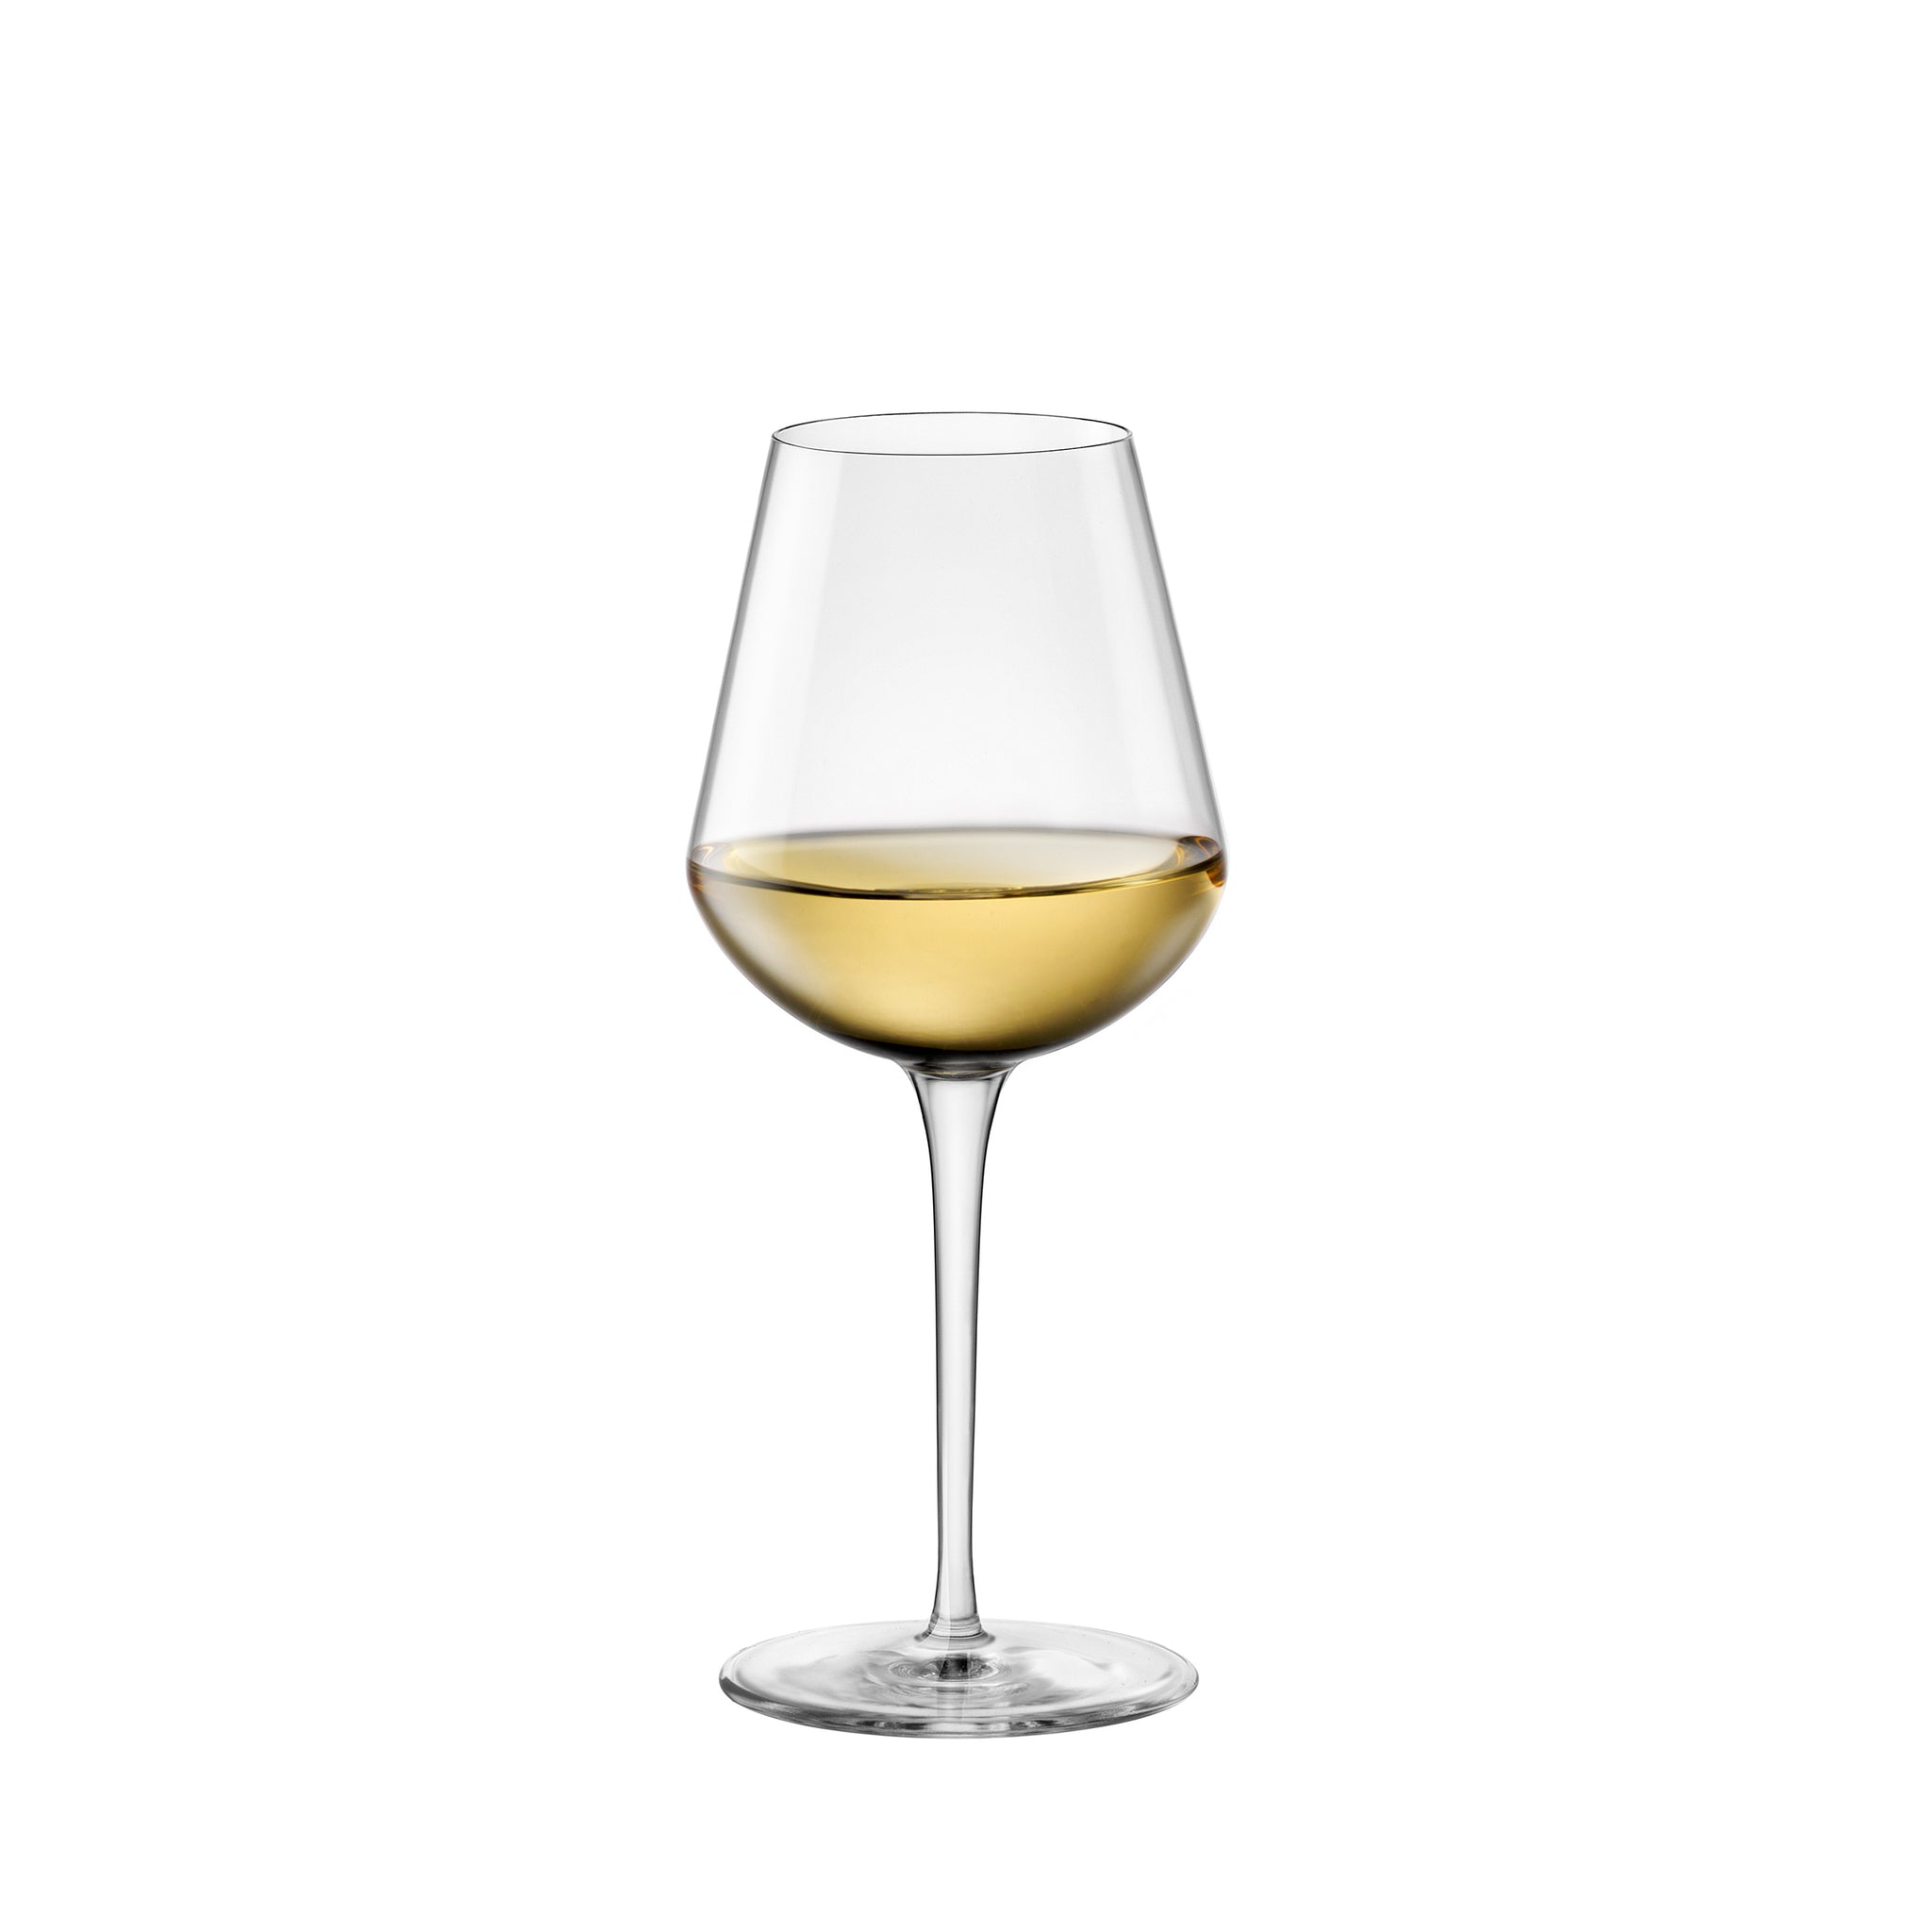 InAlto Uno 15.75 oz. Medium Wine Glasses (Set of 6)